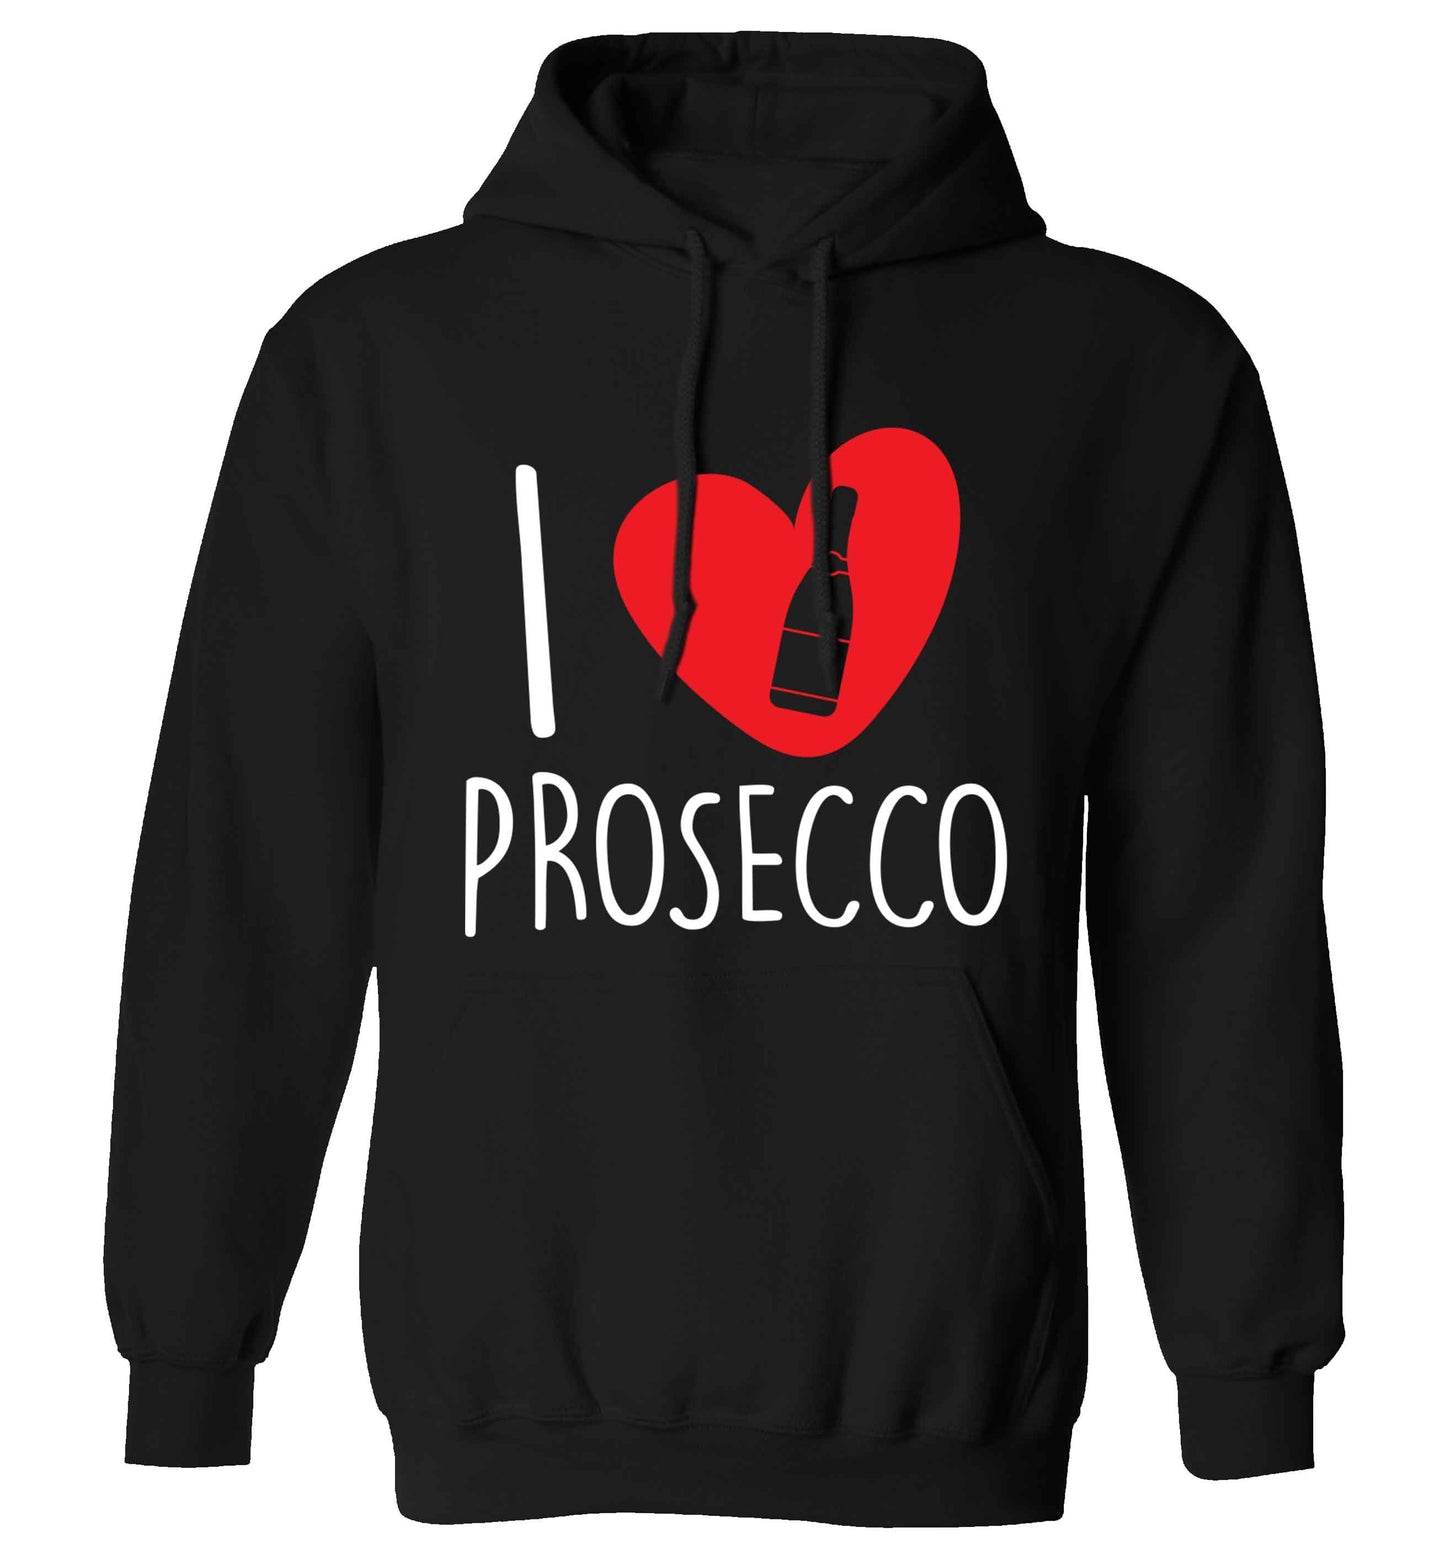 I love prosecco adults unisex black hoodie 2XL